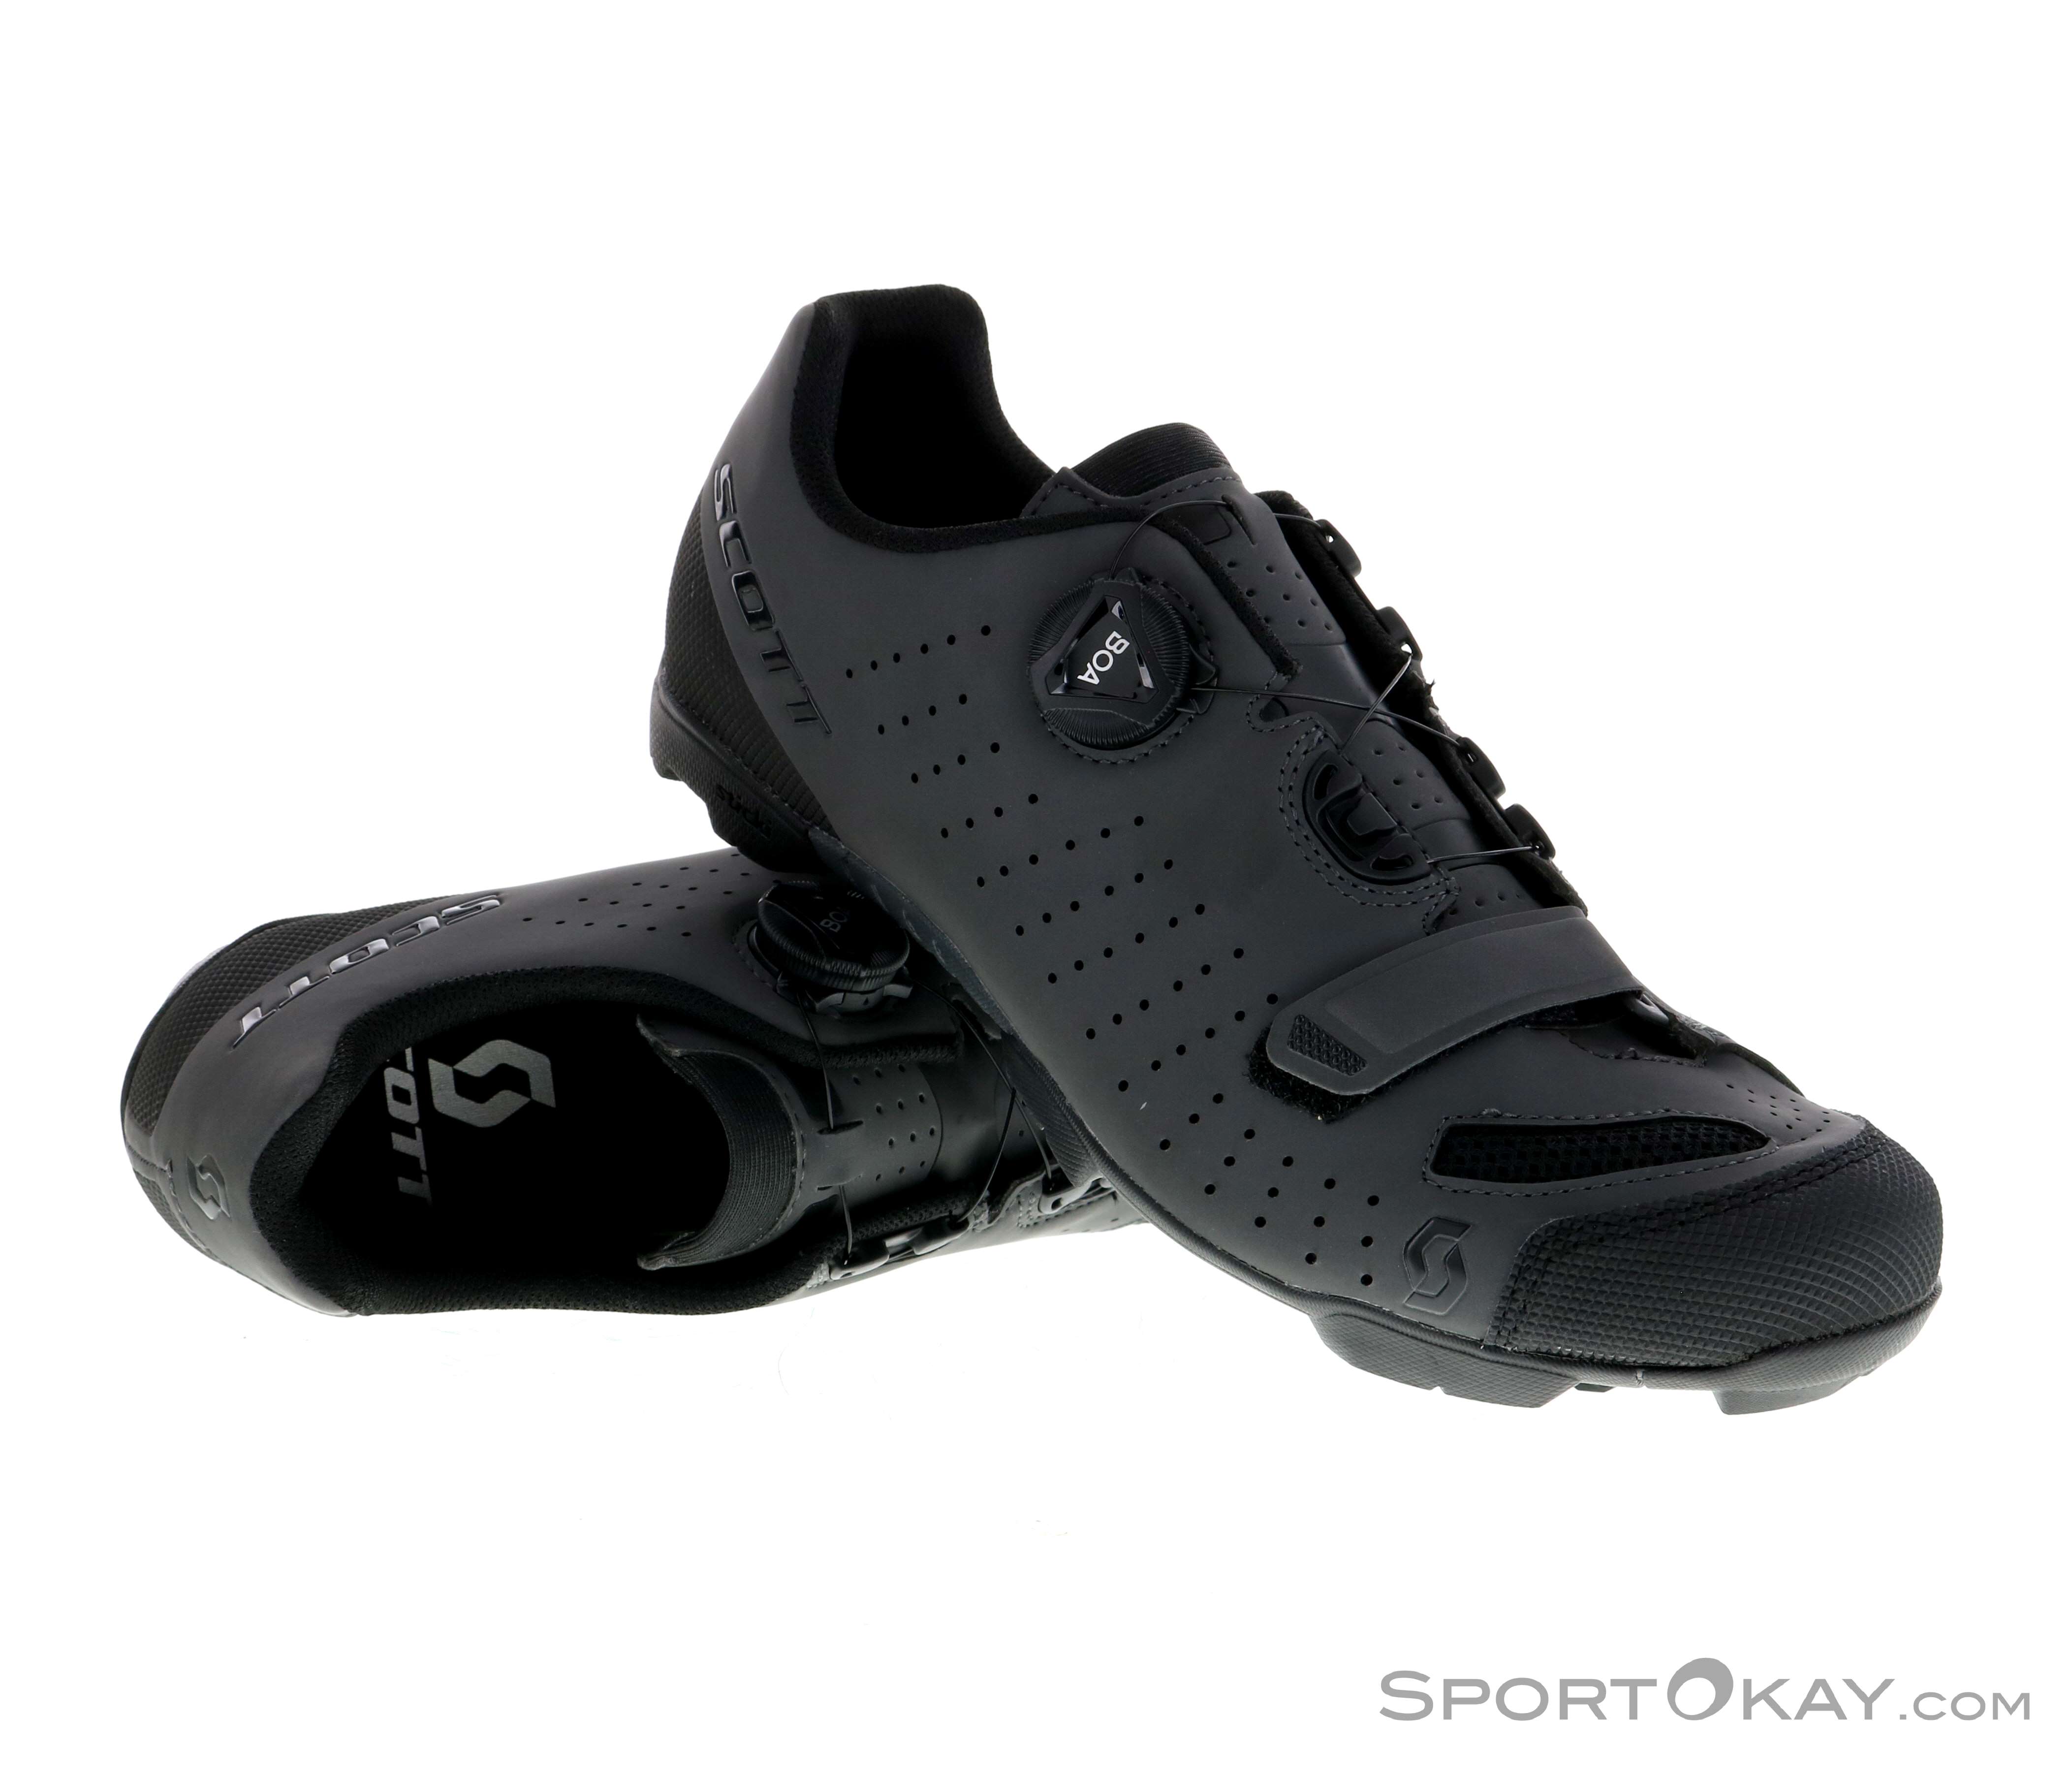 Scott MTB Comp Boa Mountain Bike Shoes Reflective Men's Size 8 US 41 EU 